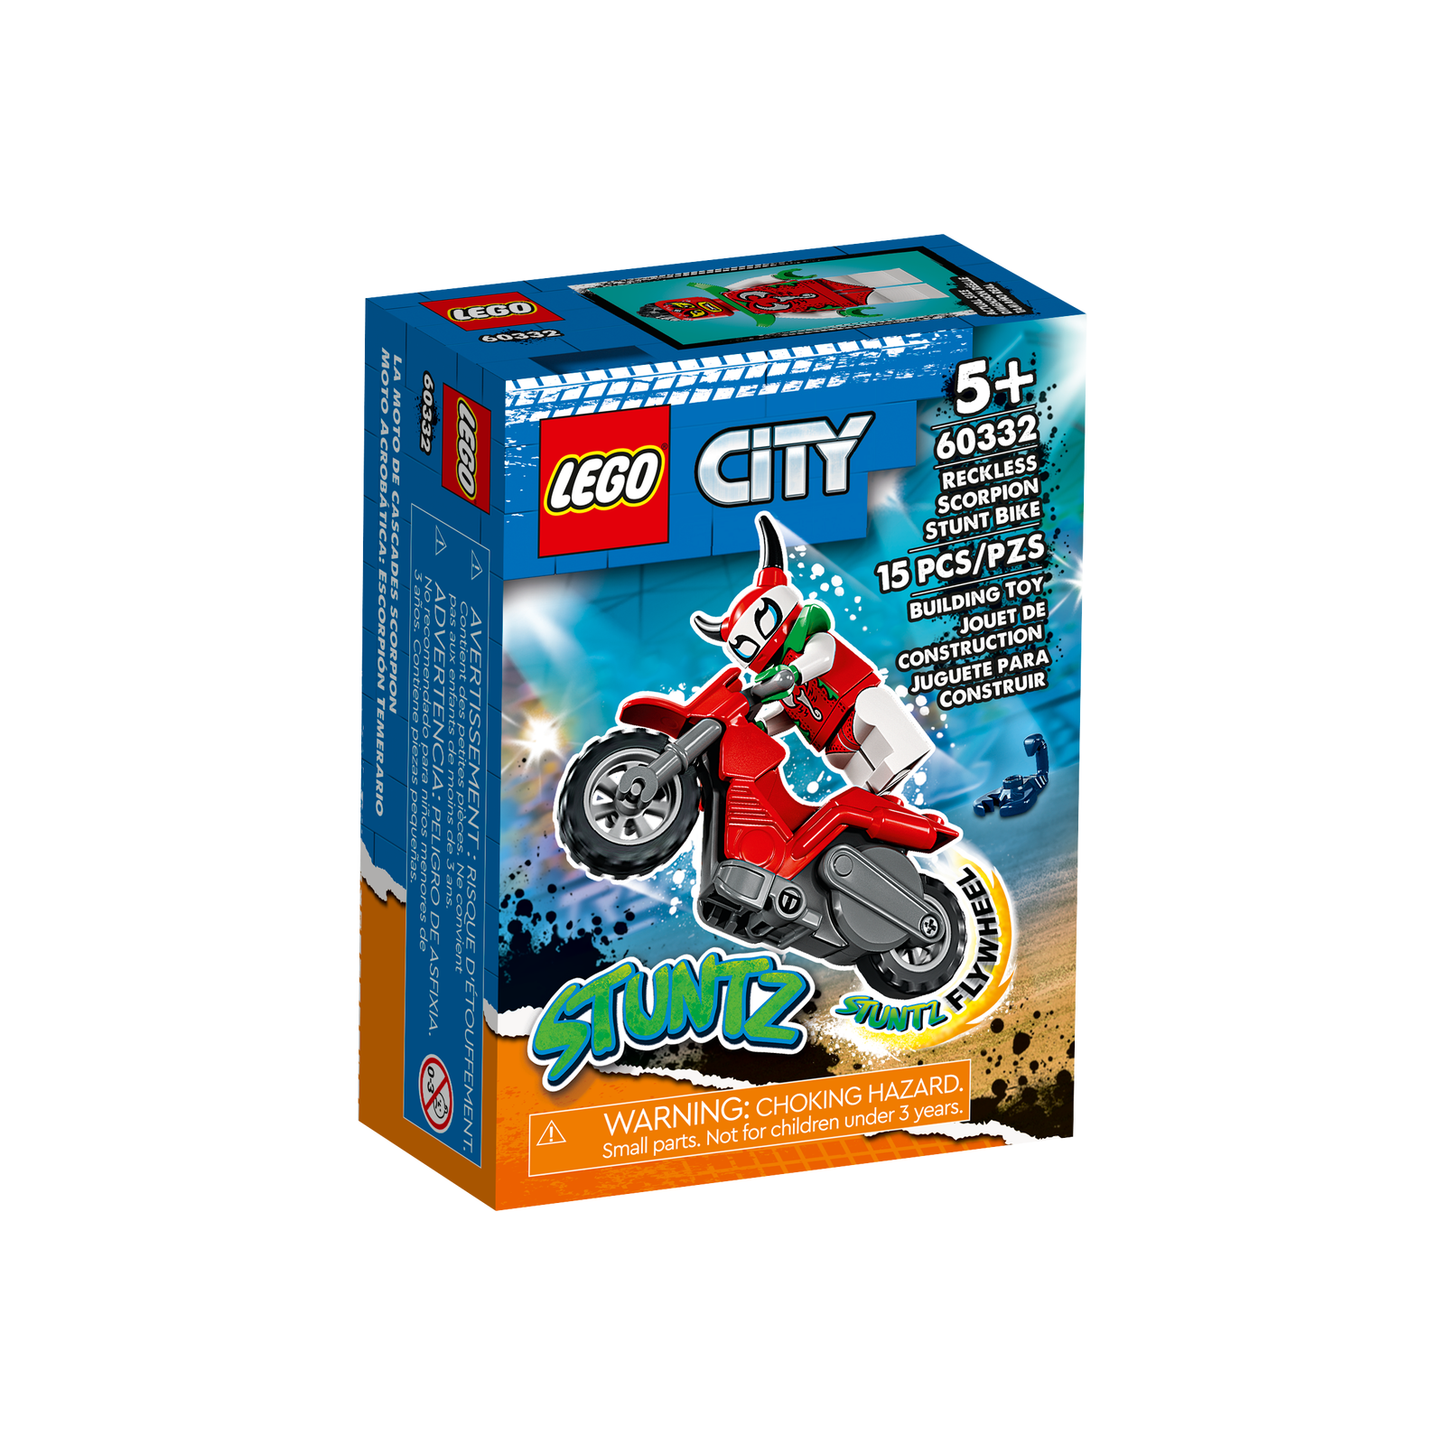 Lego City Reckless Scorpion Stunt Bike 60332